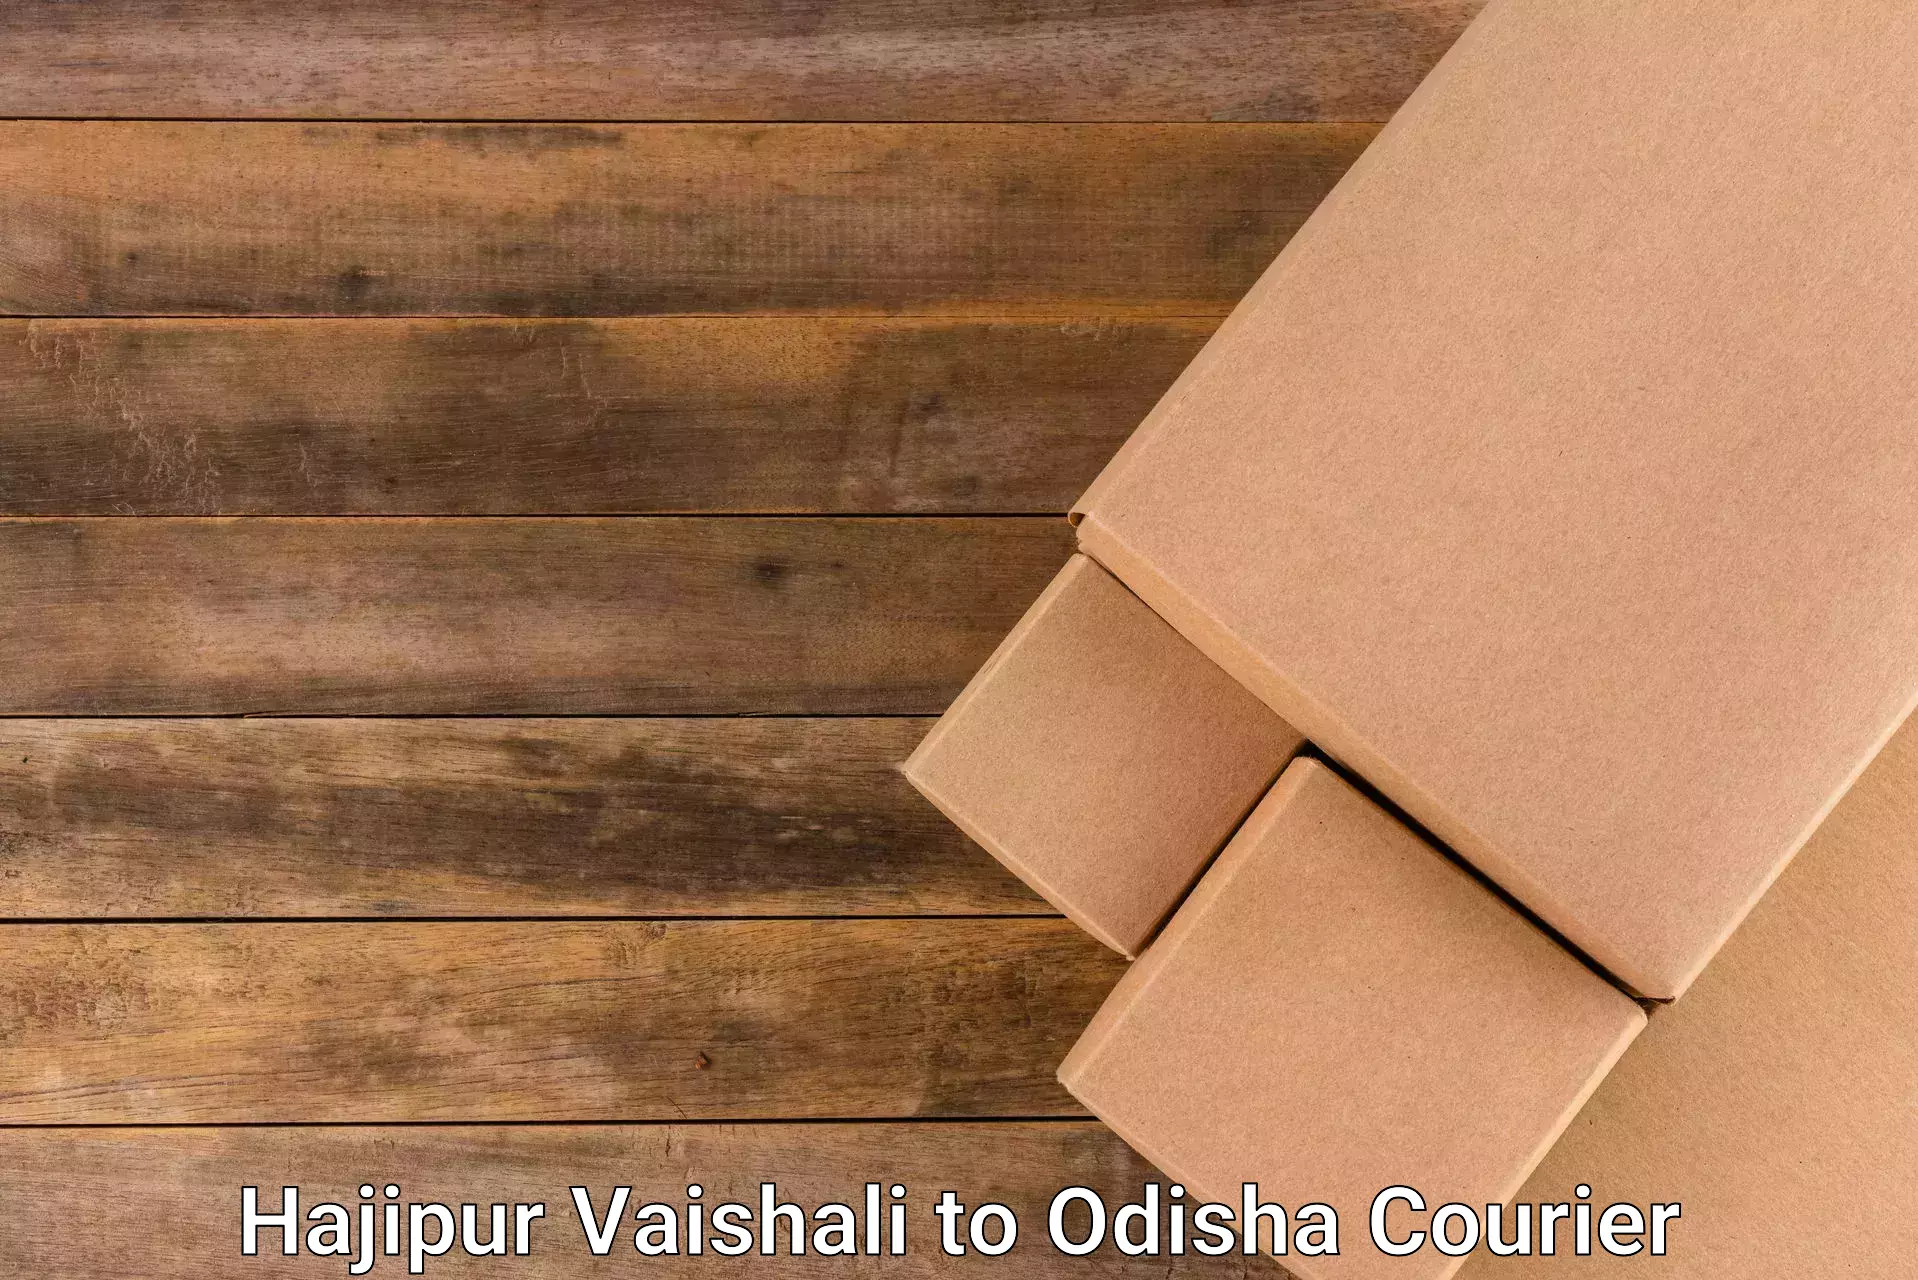 Express courier facilities Hajipur Vaishali to Dandisahi